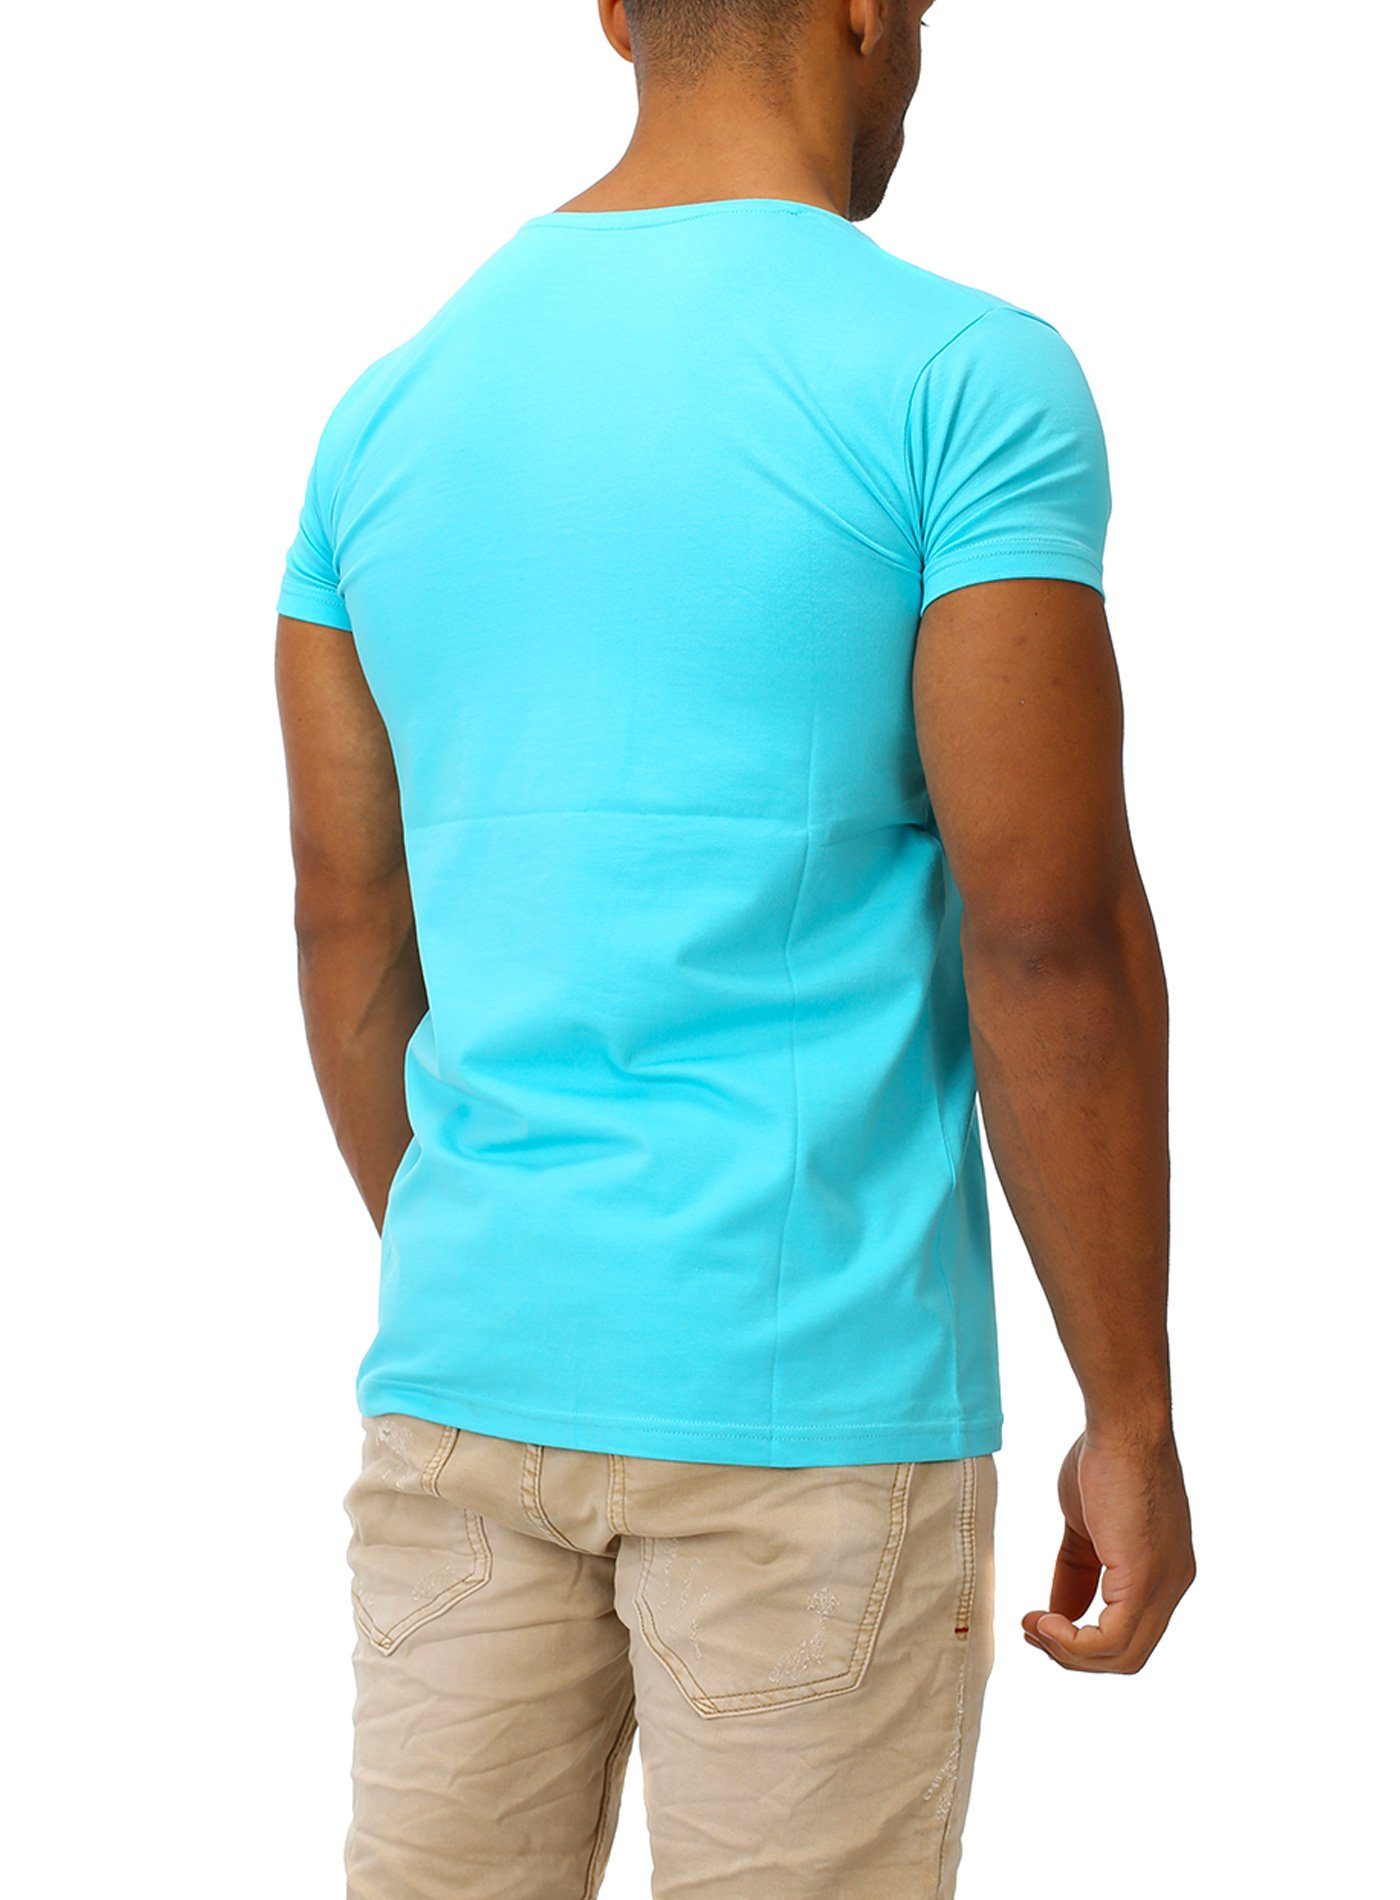 Rundhalsausschnitt turquoise mit Franks T-Shirt Joe